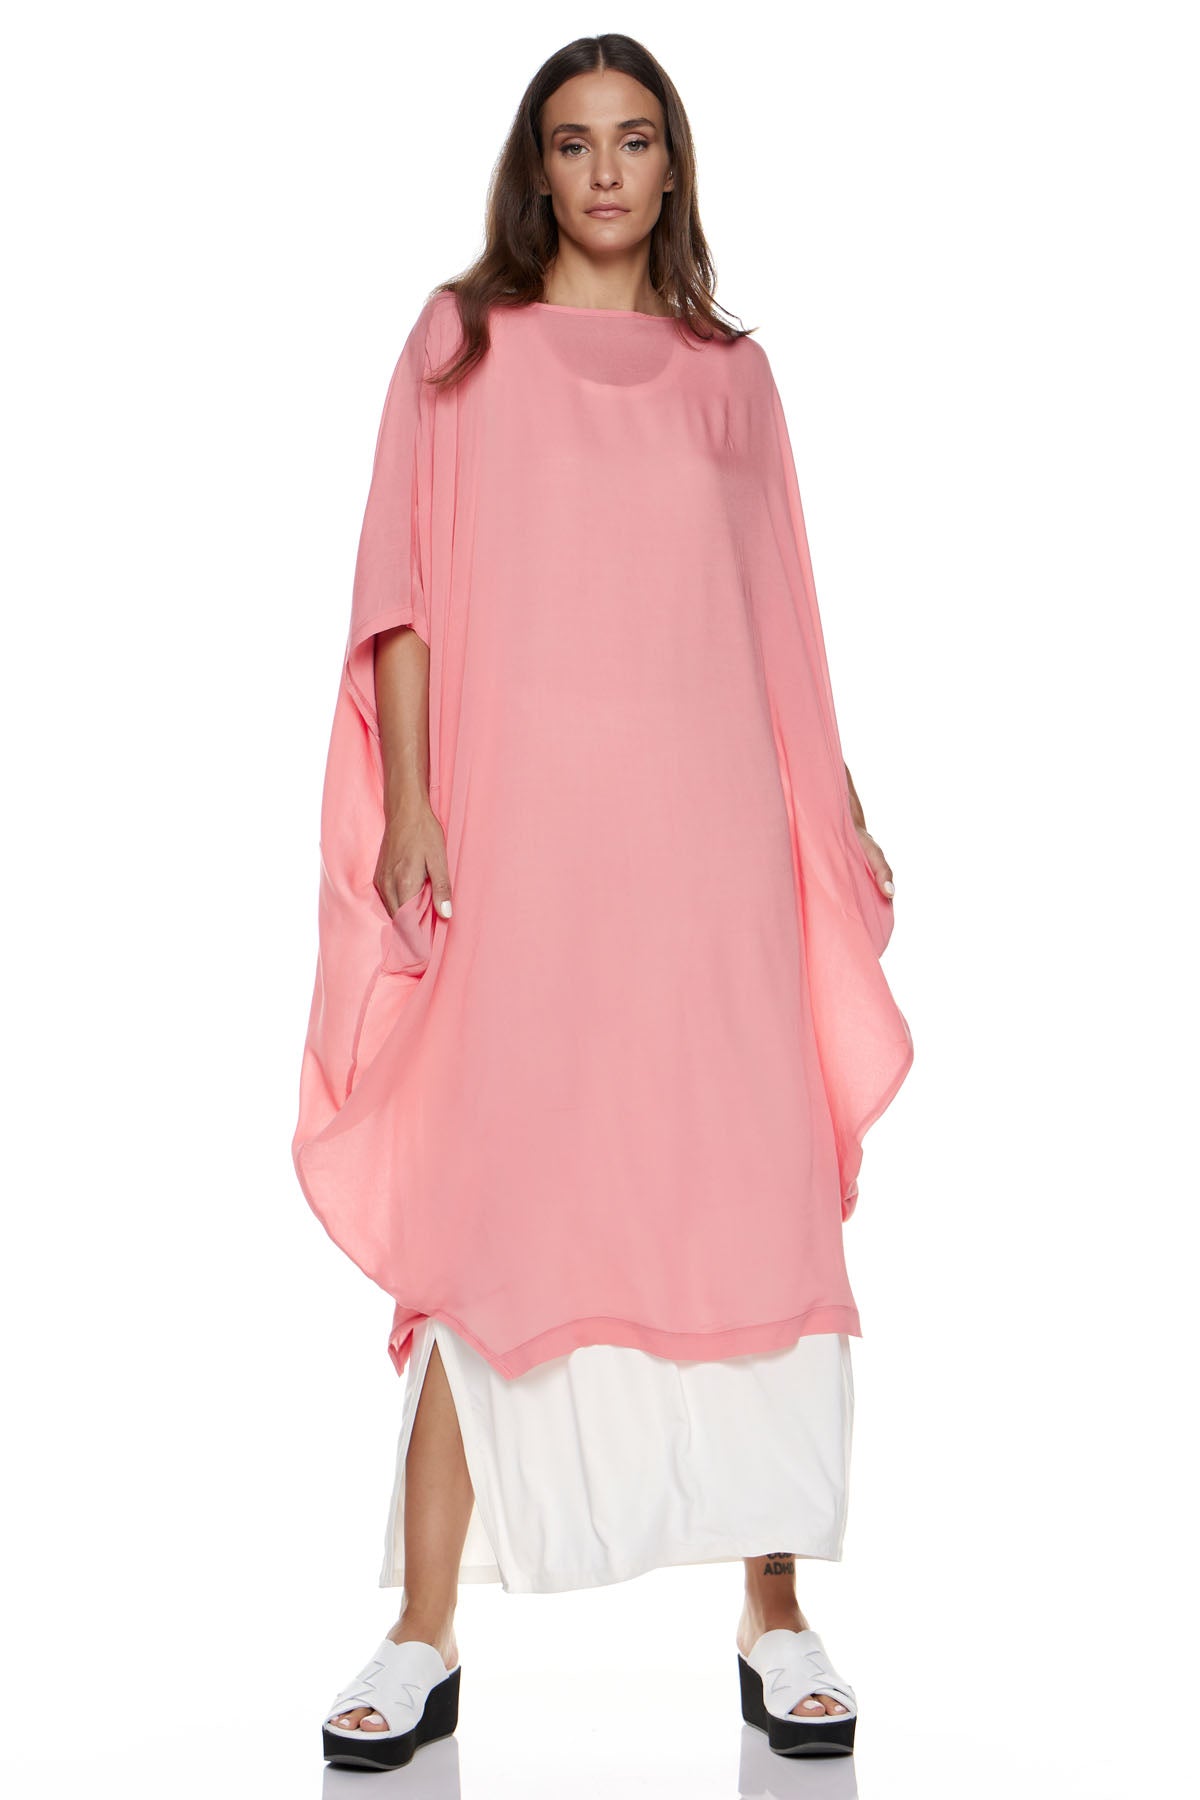 Chic & Simple Συνδυασμός Φόρεμα Κύκλος & Φόρεμα (Basics) Φατιόνα - Ροζ με Λευκό 